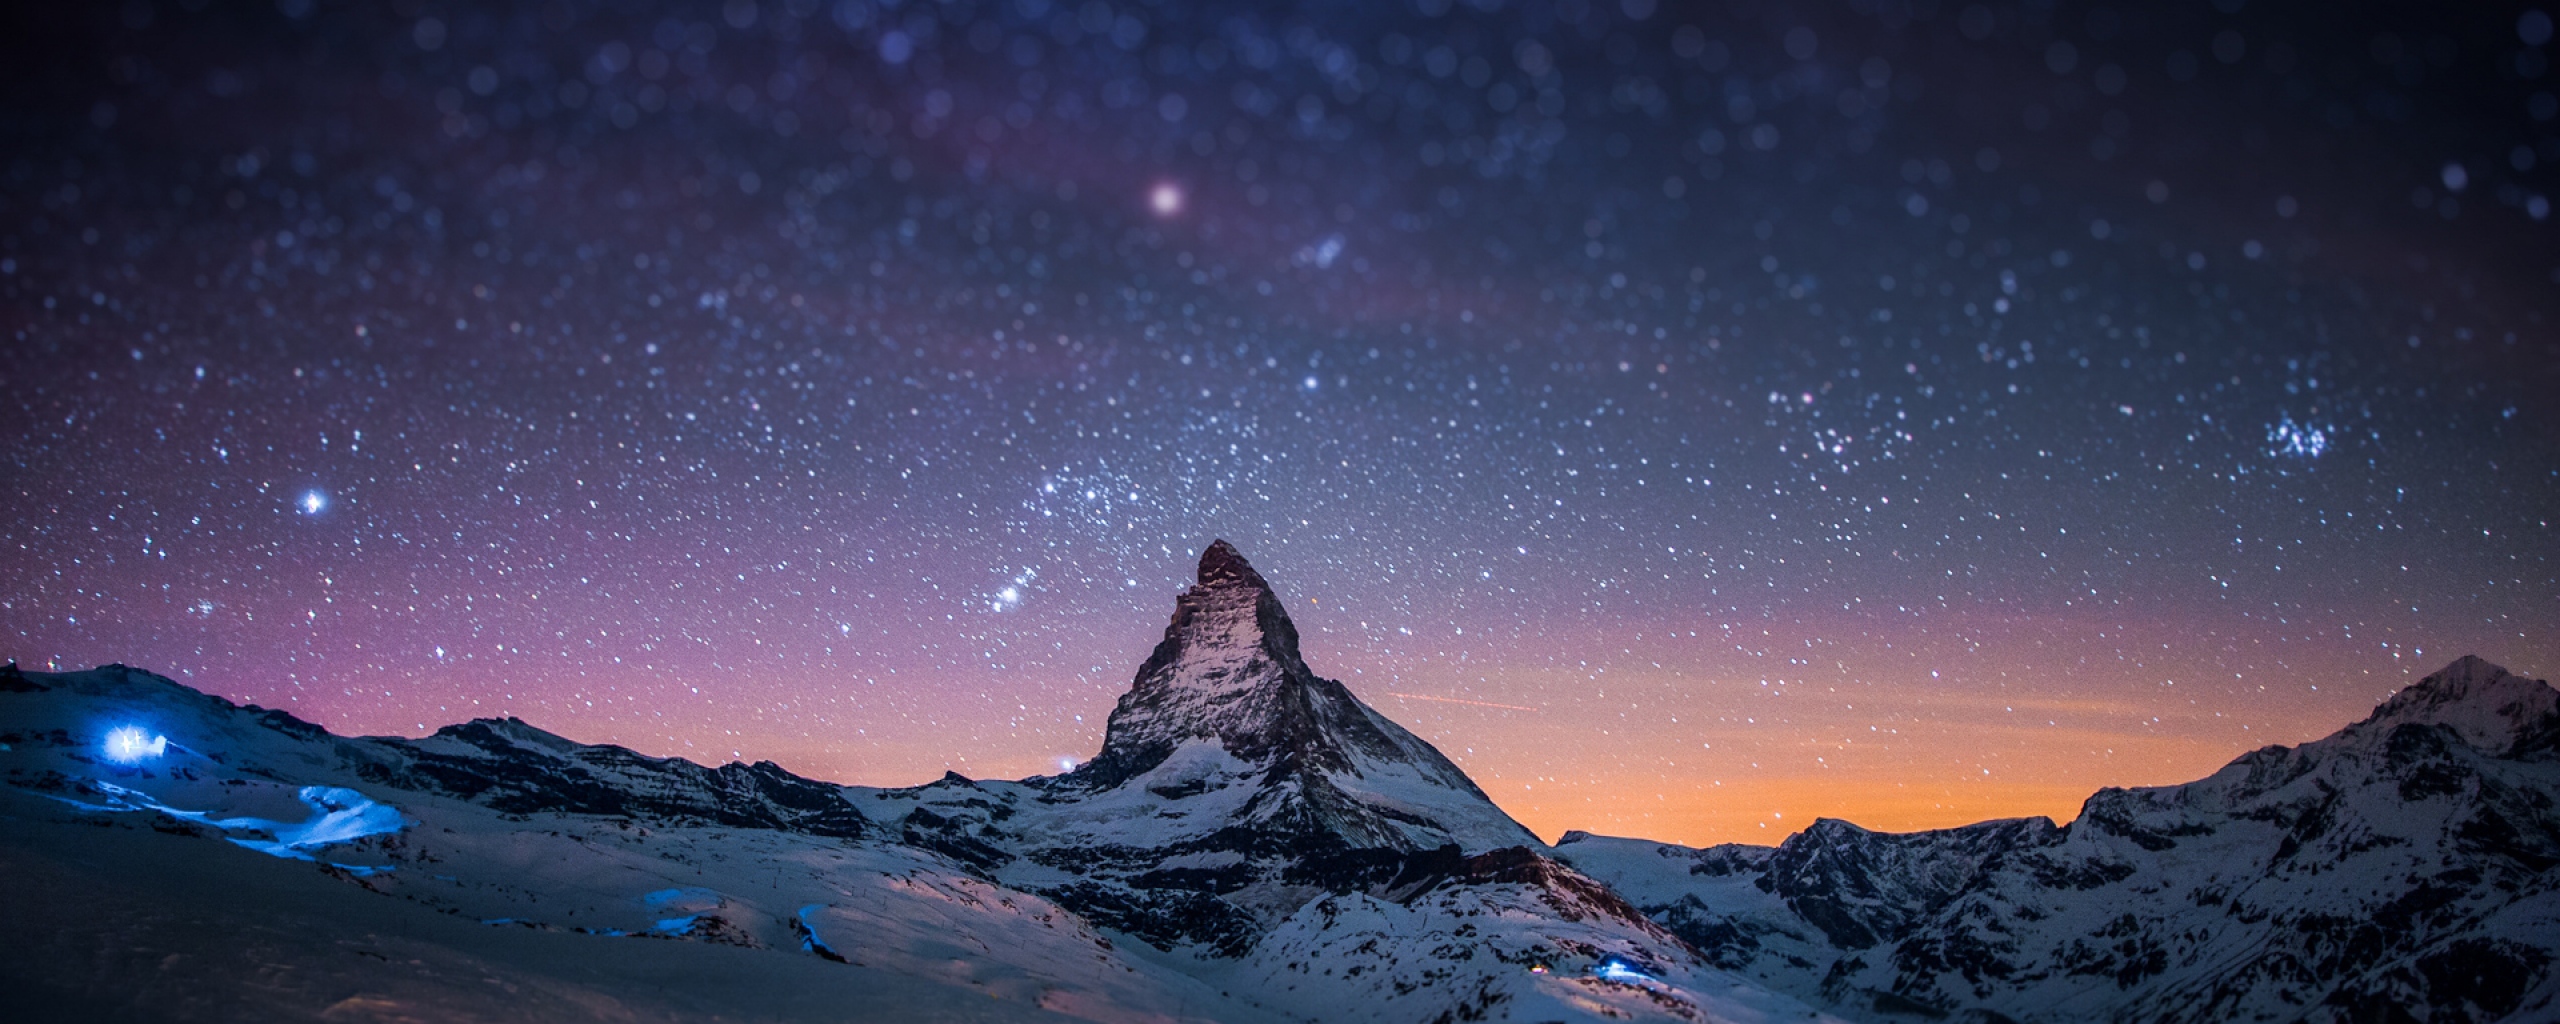 Download Wallpaper 2560x1024 Mountain, Peak, Stars, Sky, Night ...